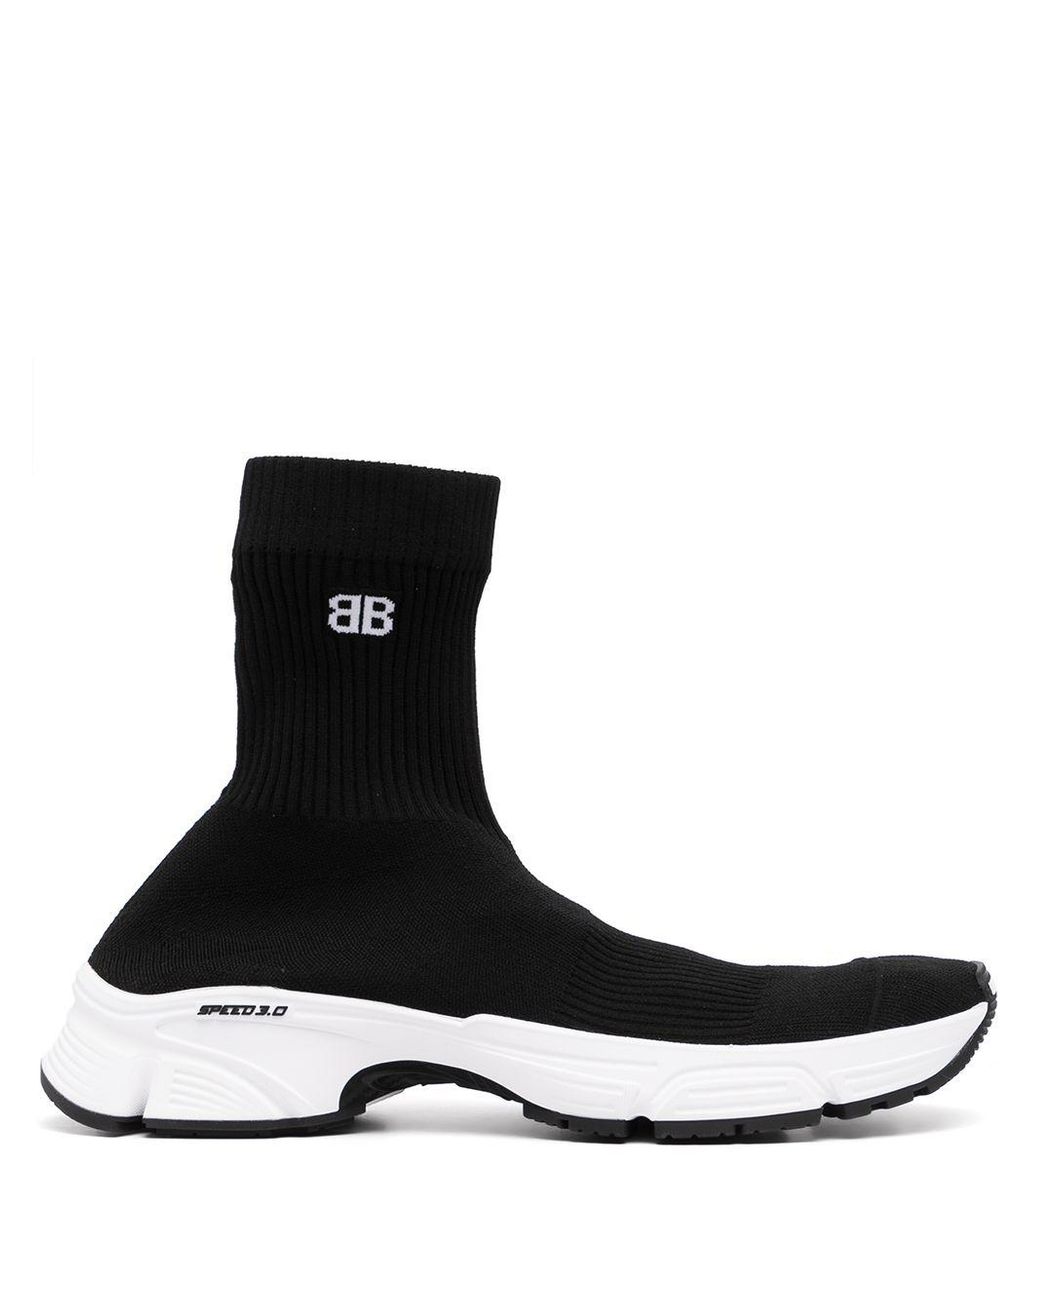 Balenciaga Speed 3.0 Sneakers in Black for Men - Lyst